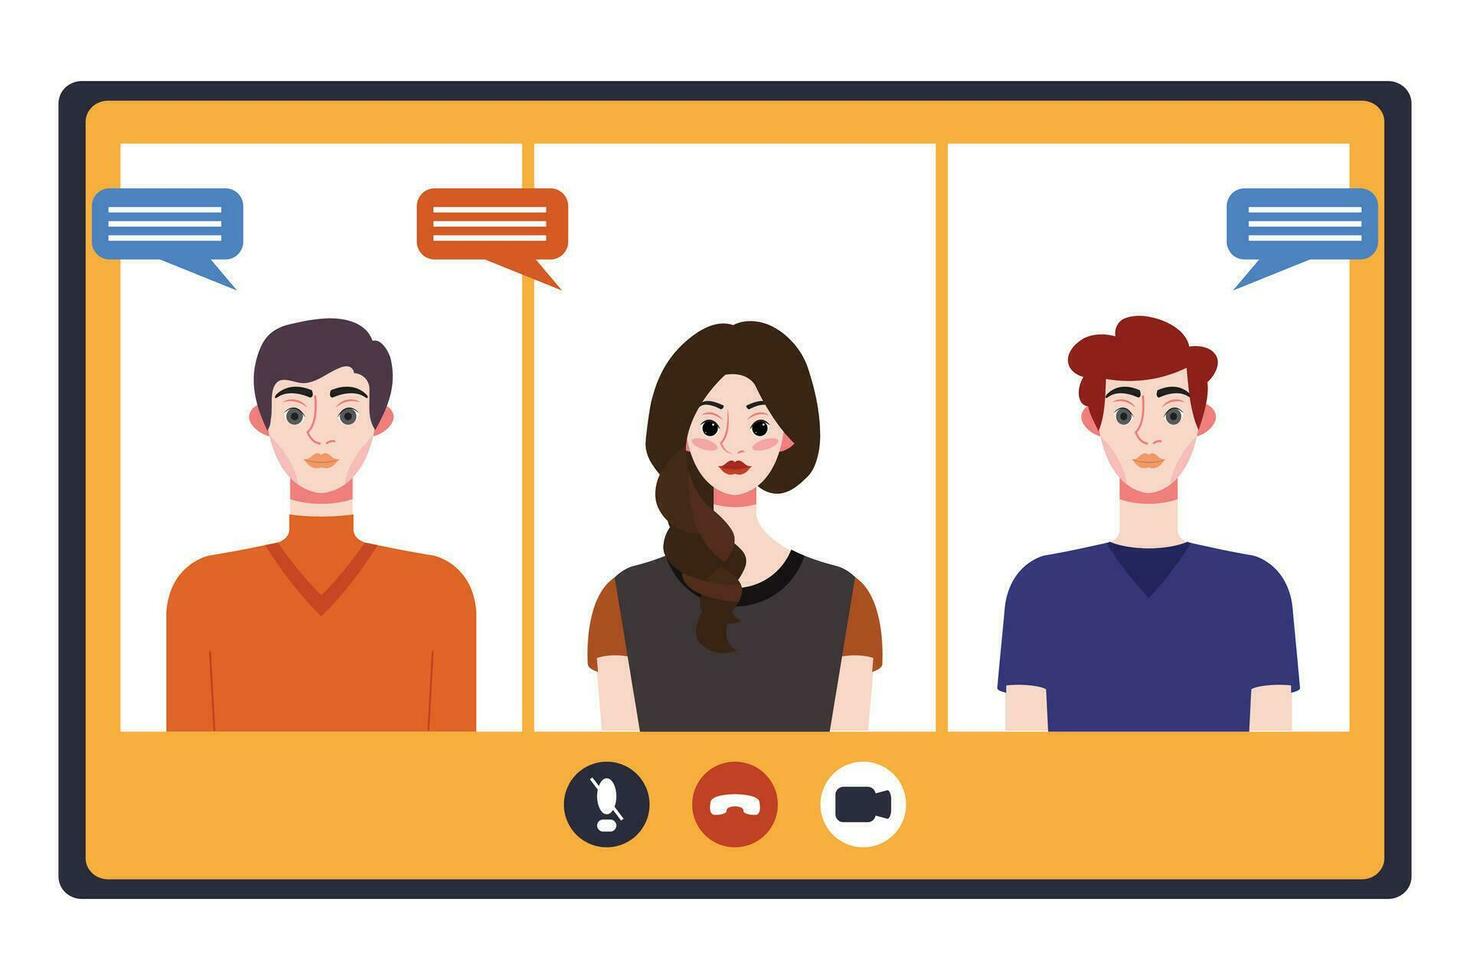 vídeo conferencia concepto. personas avatares en computadora pantalla. vector ilustración